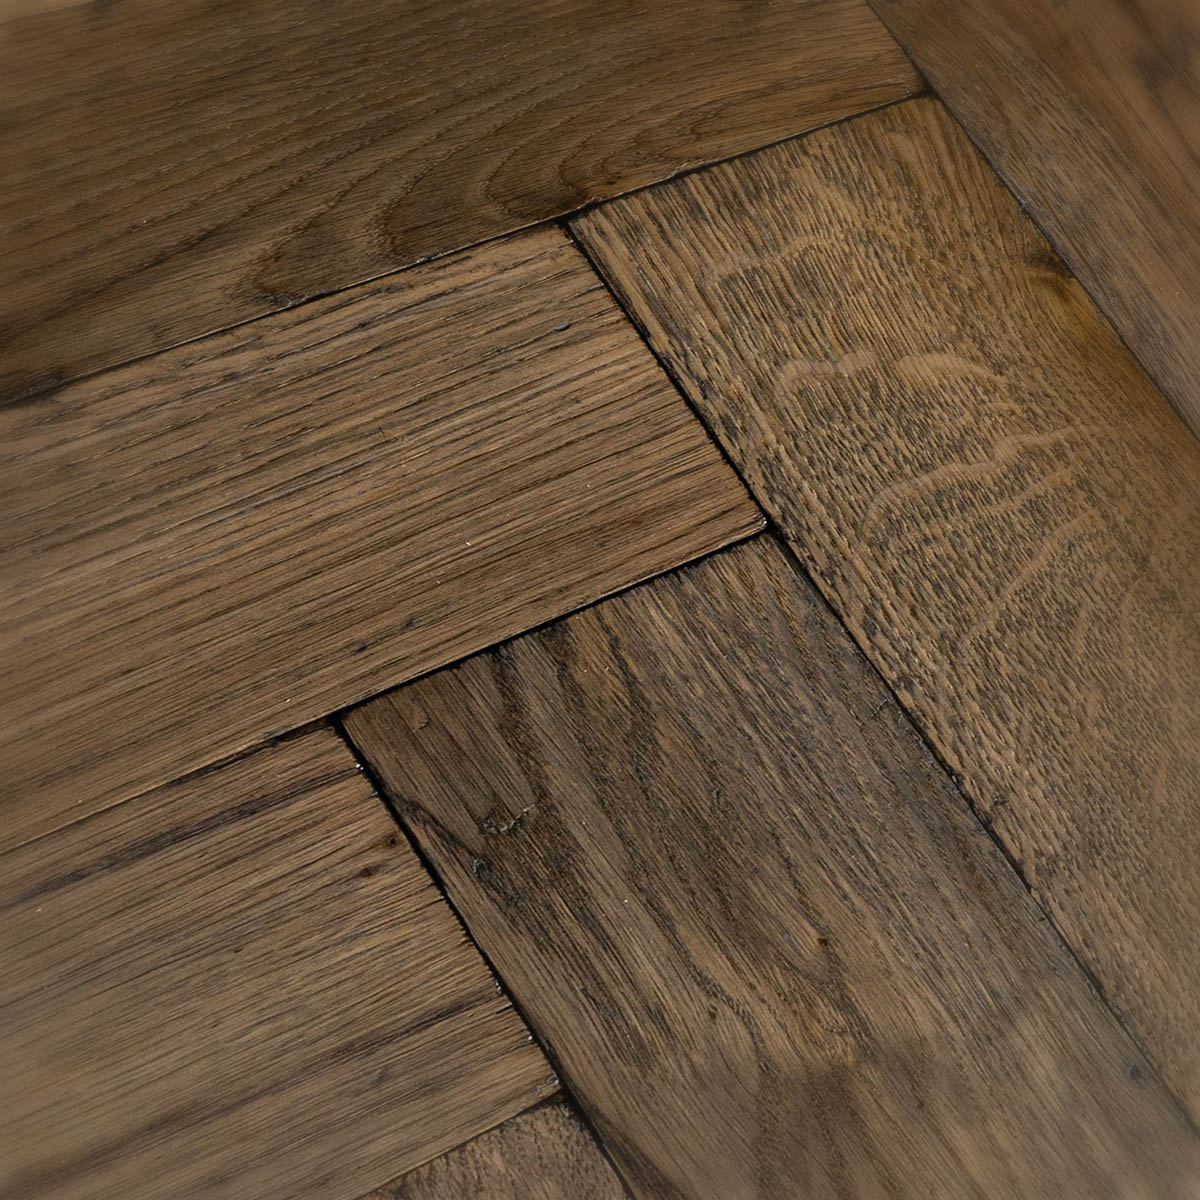 Dorset Walk - Polished, Worn Solid Oak Wood Floor